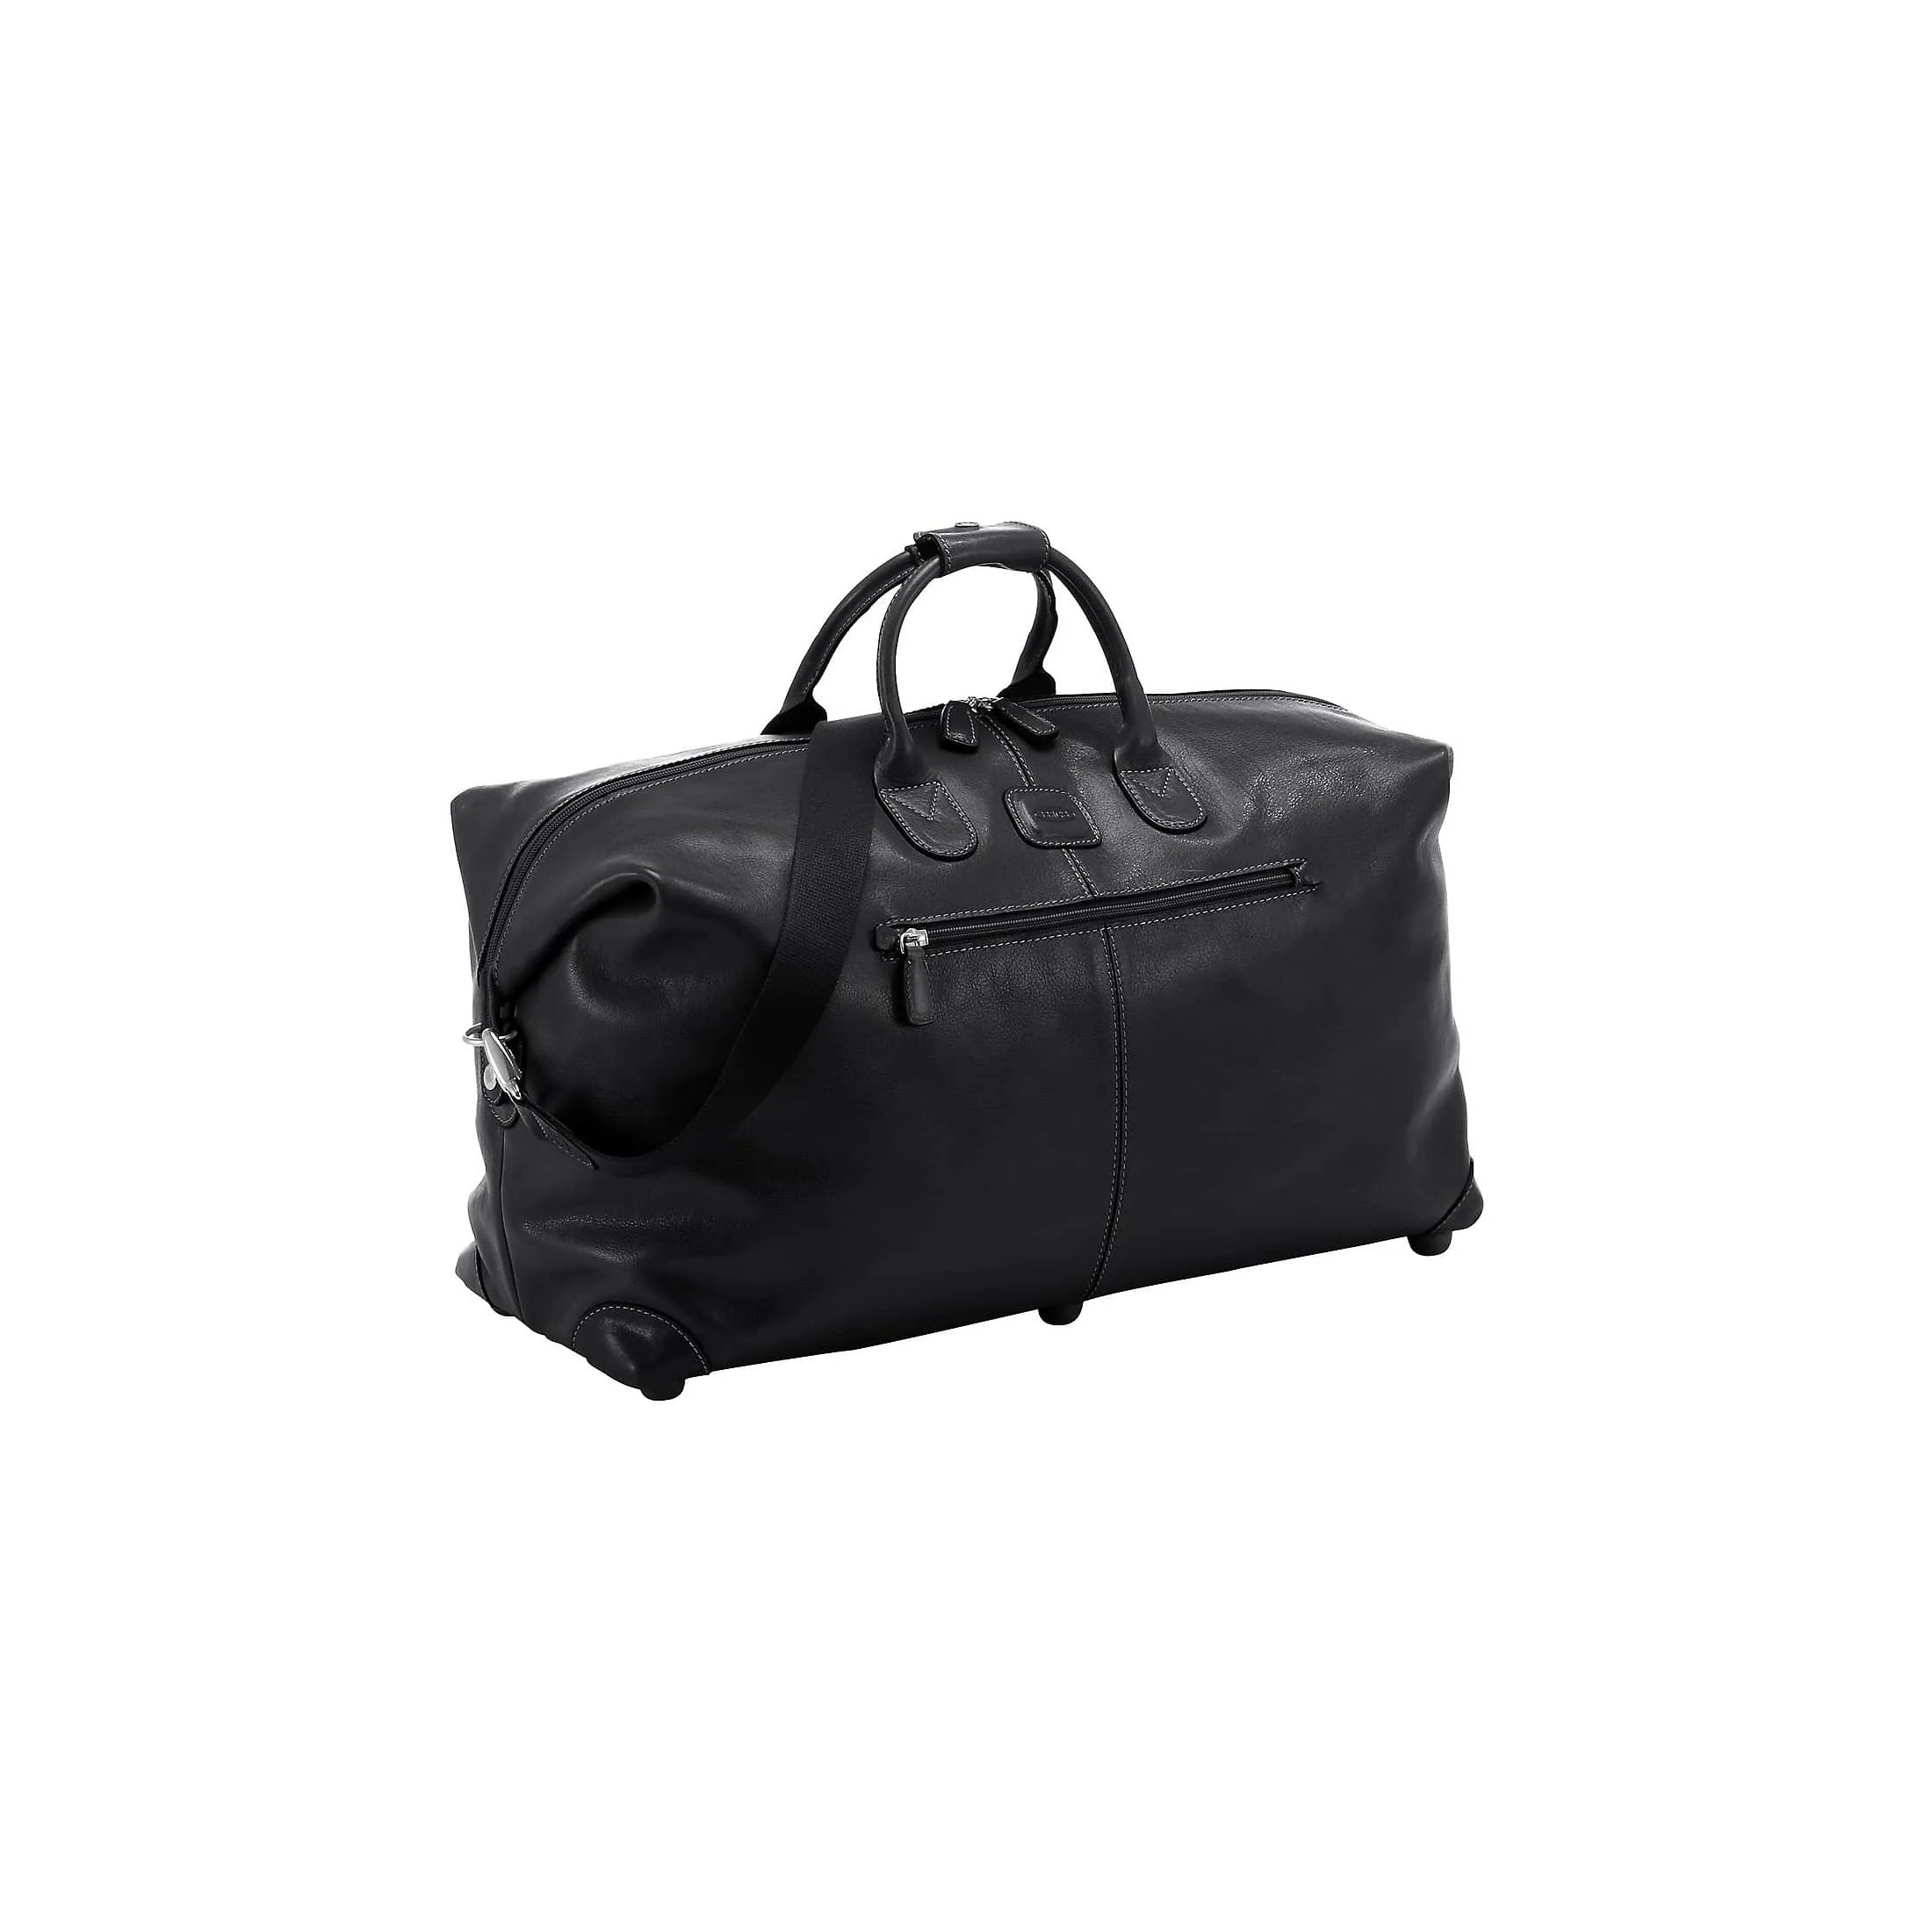 Brics Life Pelle leather travel bag 55 cm - black